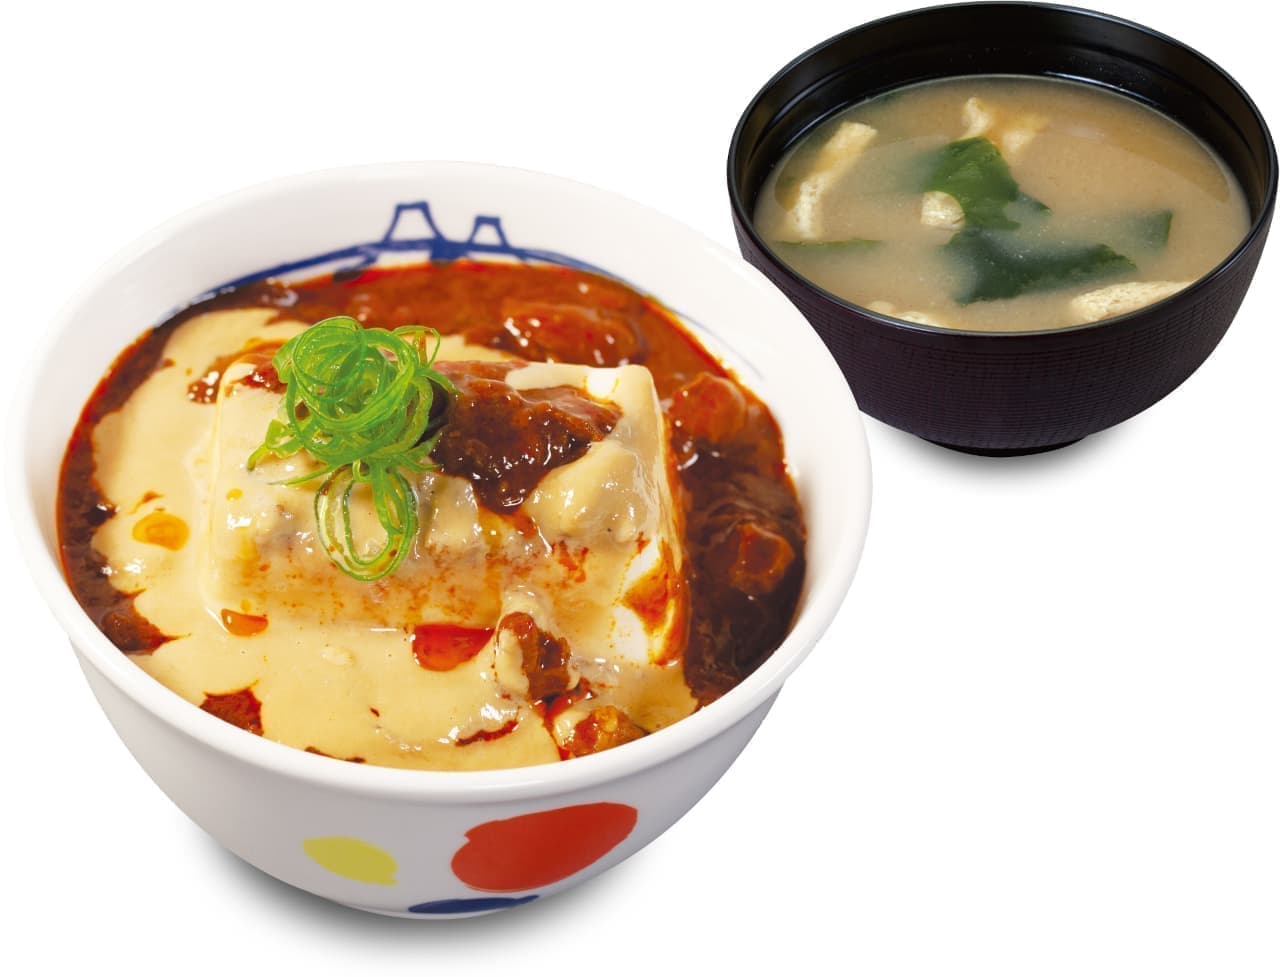 Matsuya "Fuji Tofu Meal with Sesame Sauce and Bean Paste